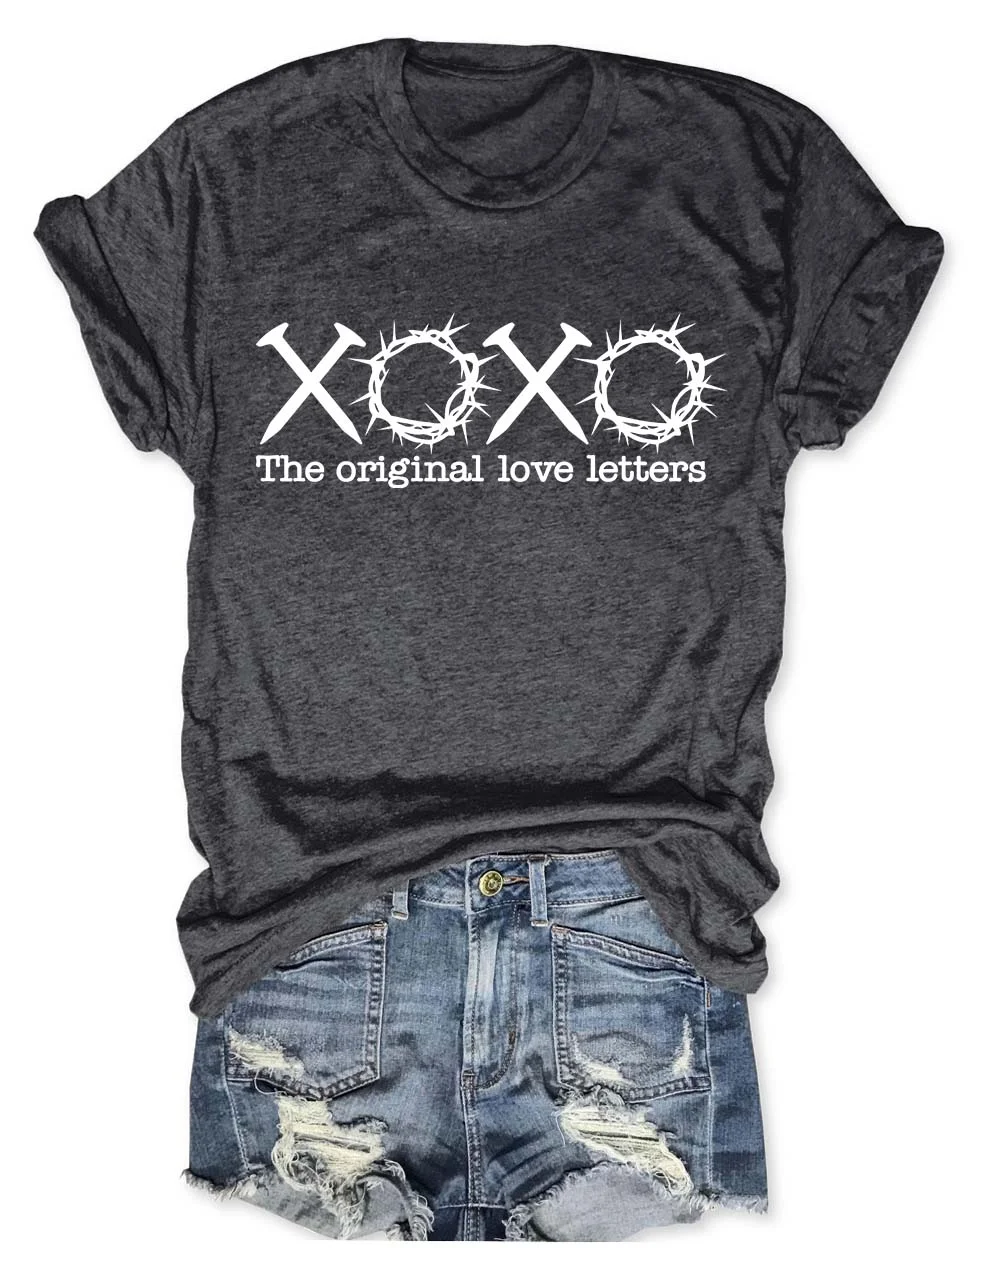 The Original Love Letters T-Shirt